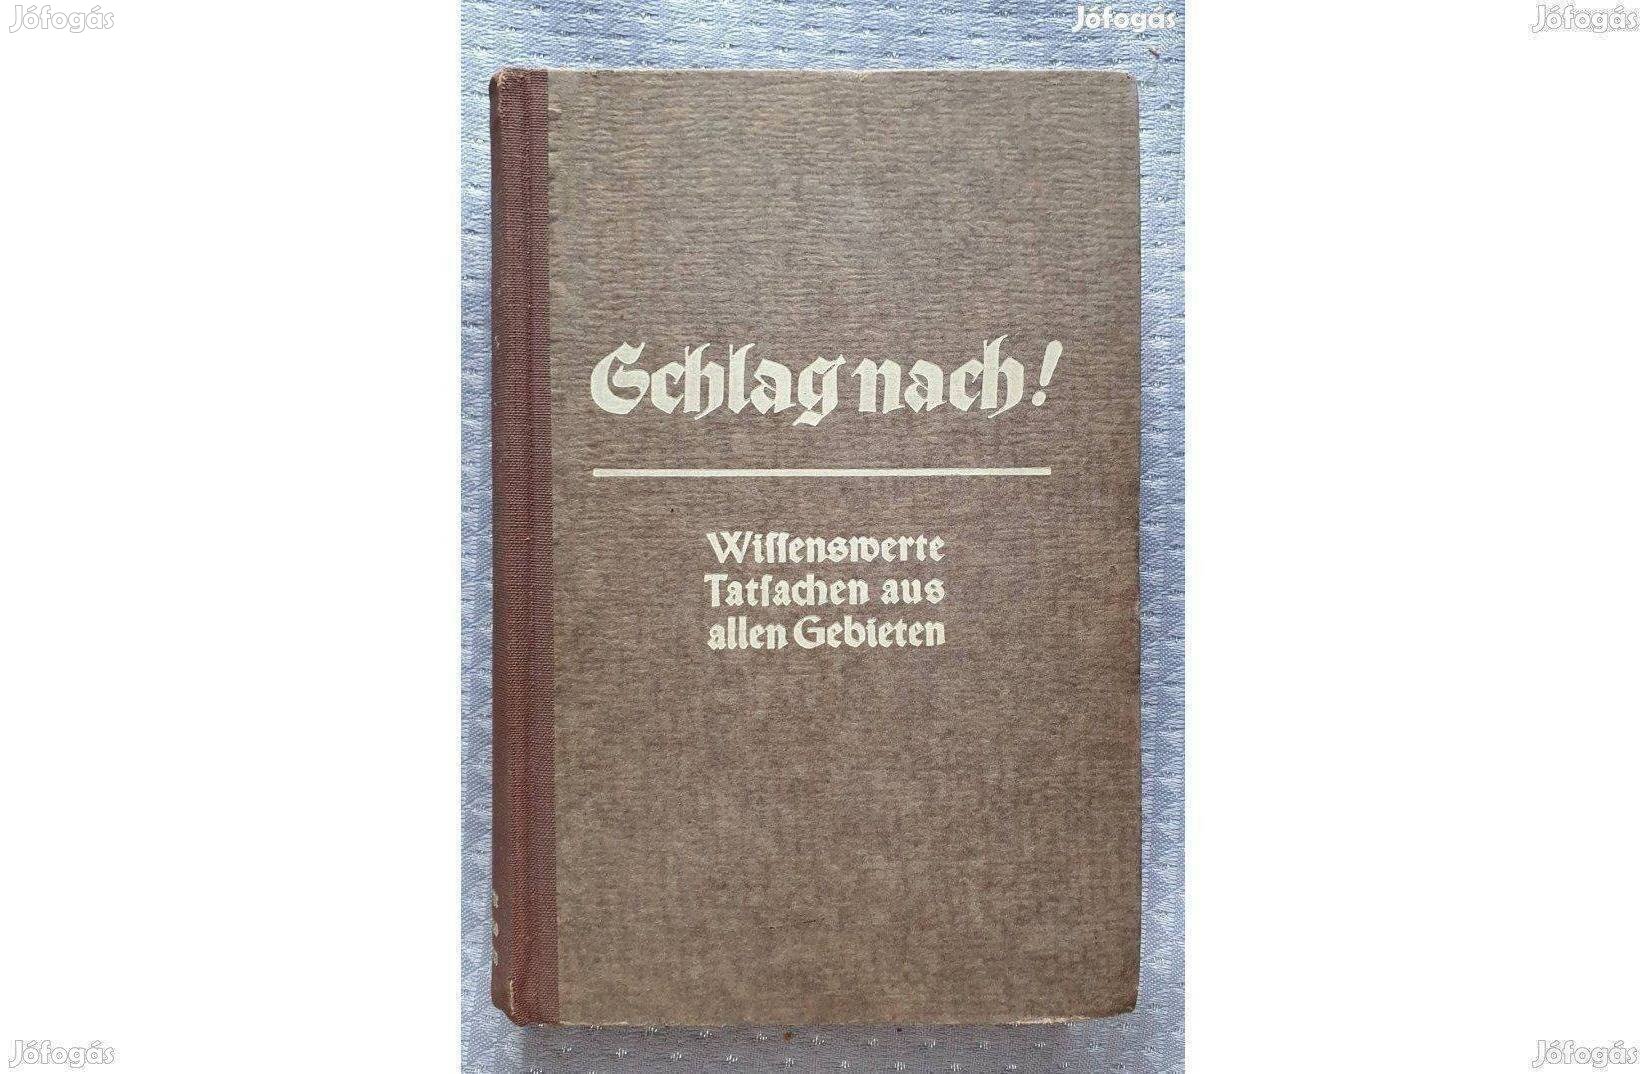 Schlag nach! német nyelvű 1941